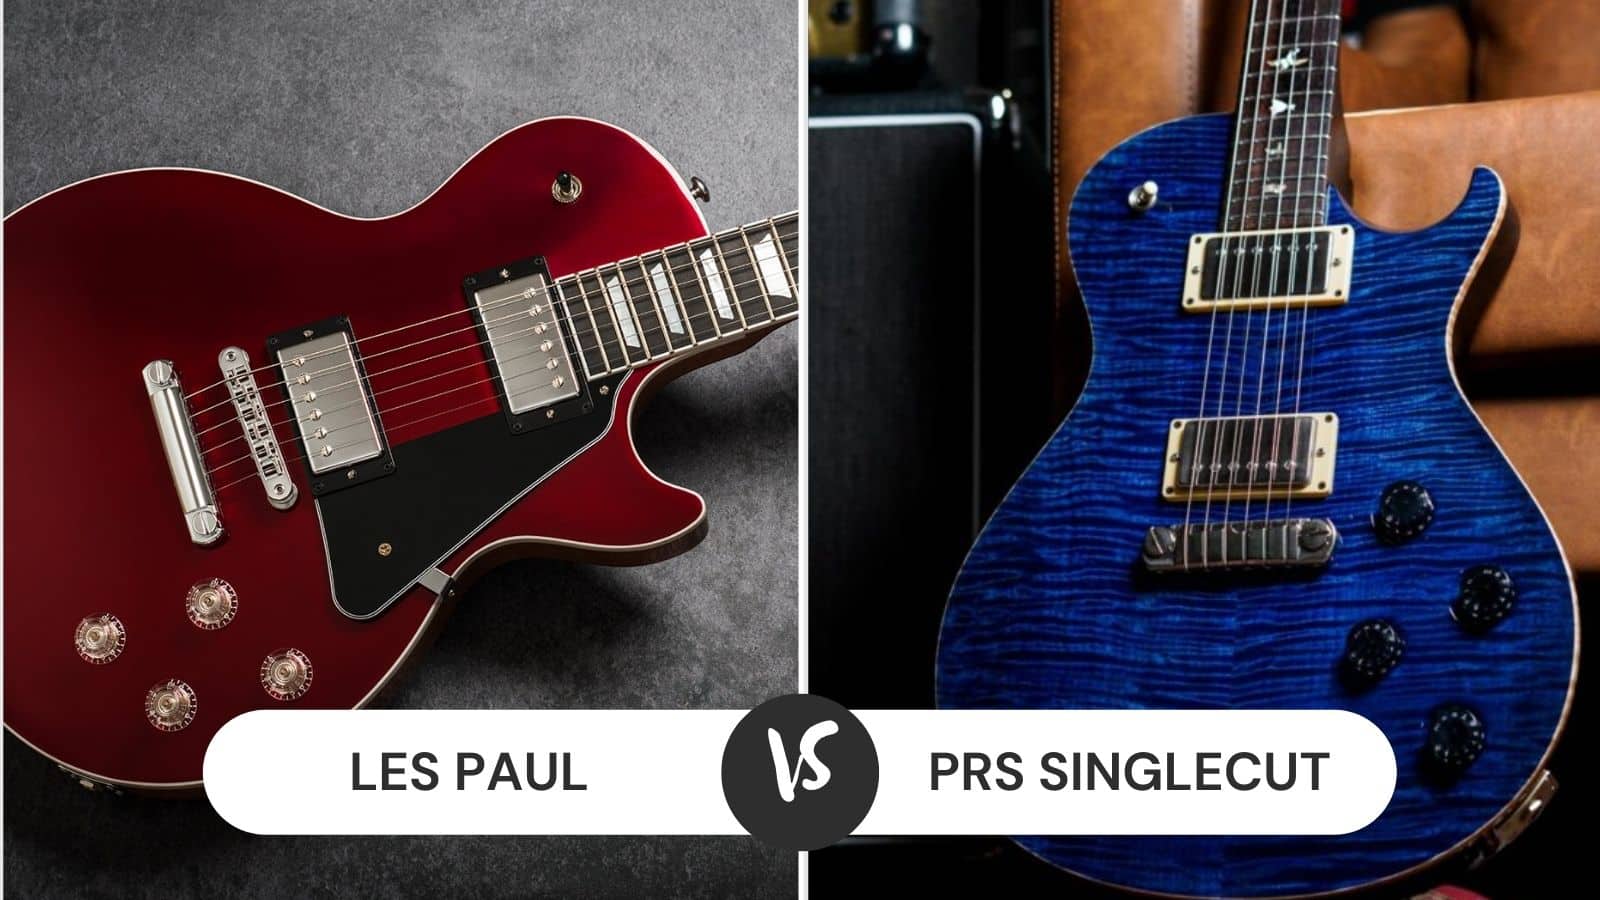 Les Paul vs PRS Singlecut